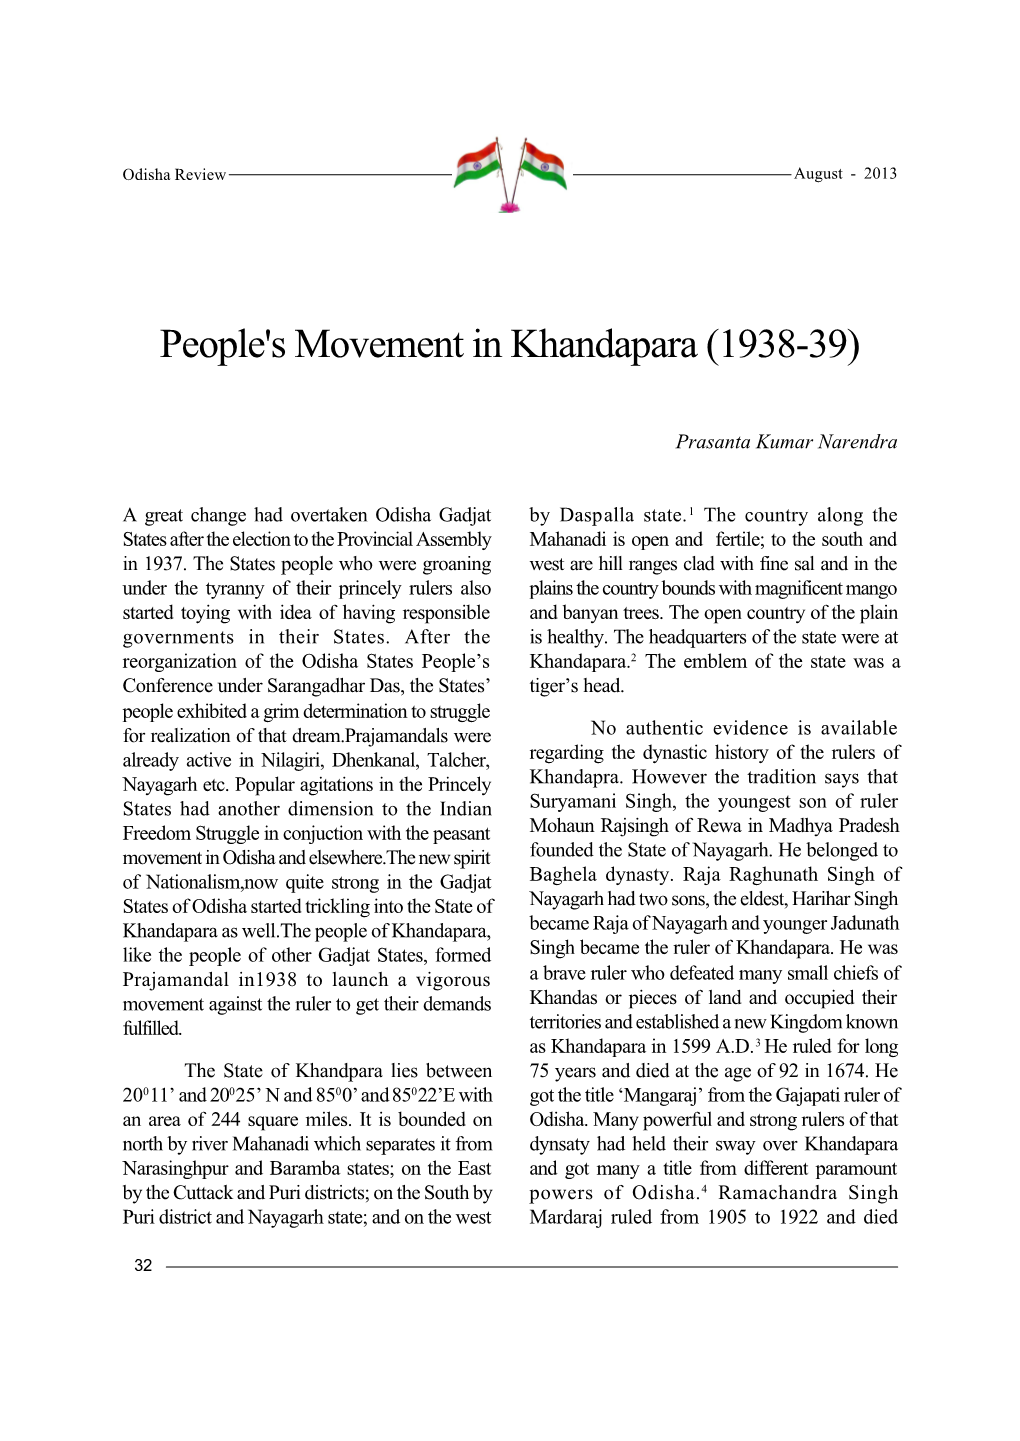 People's Movement in Khandapara (1938-39)